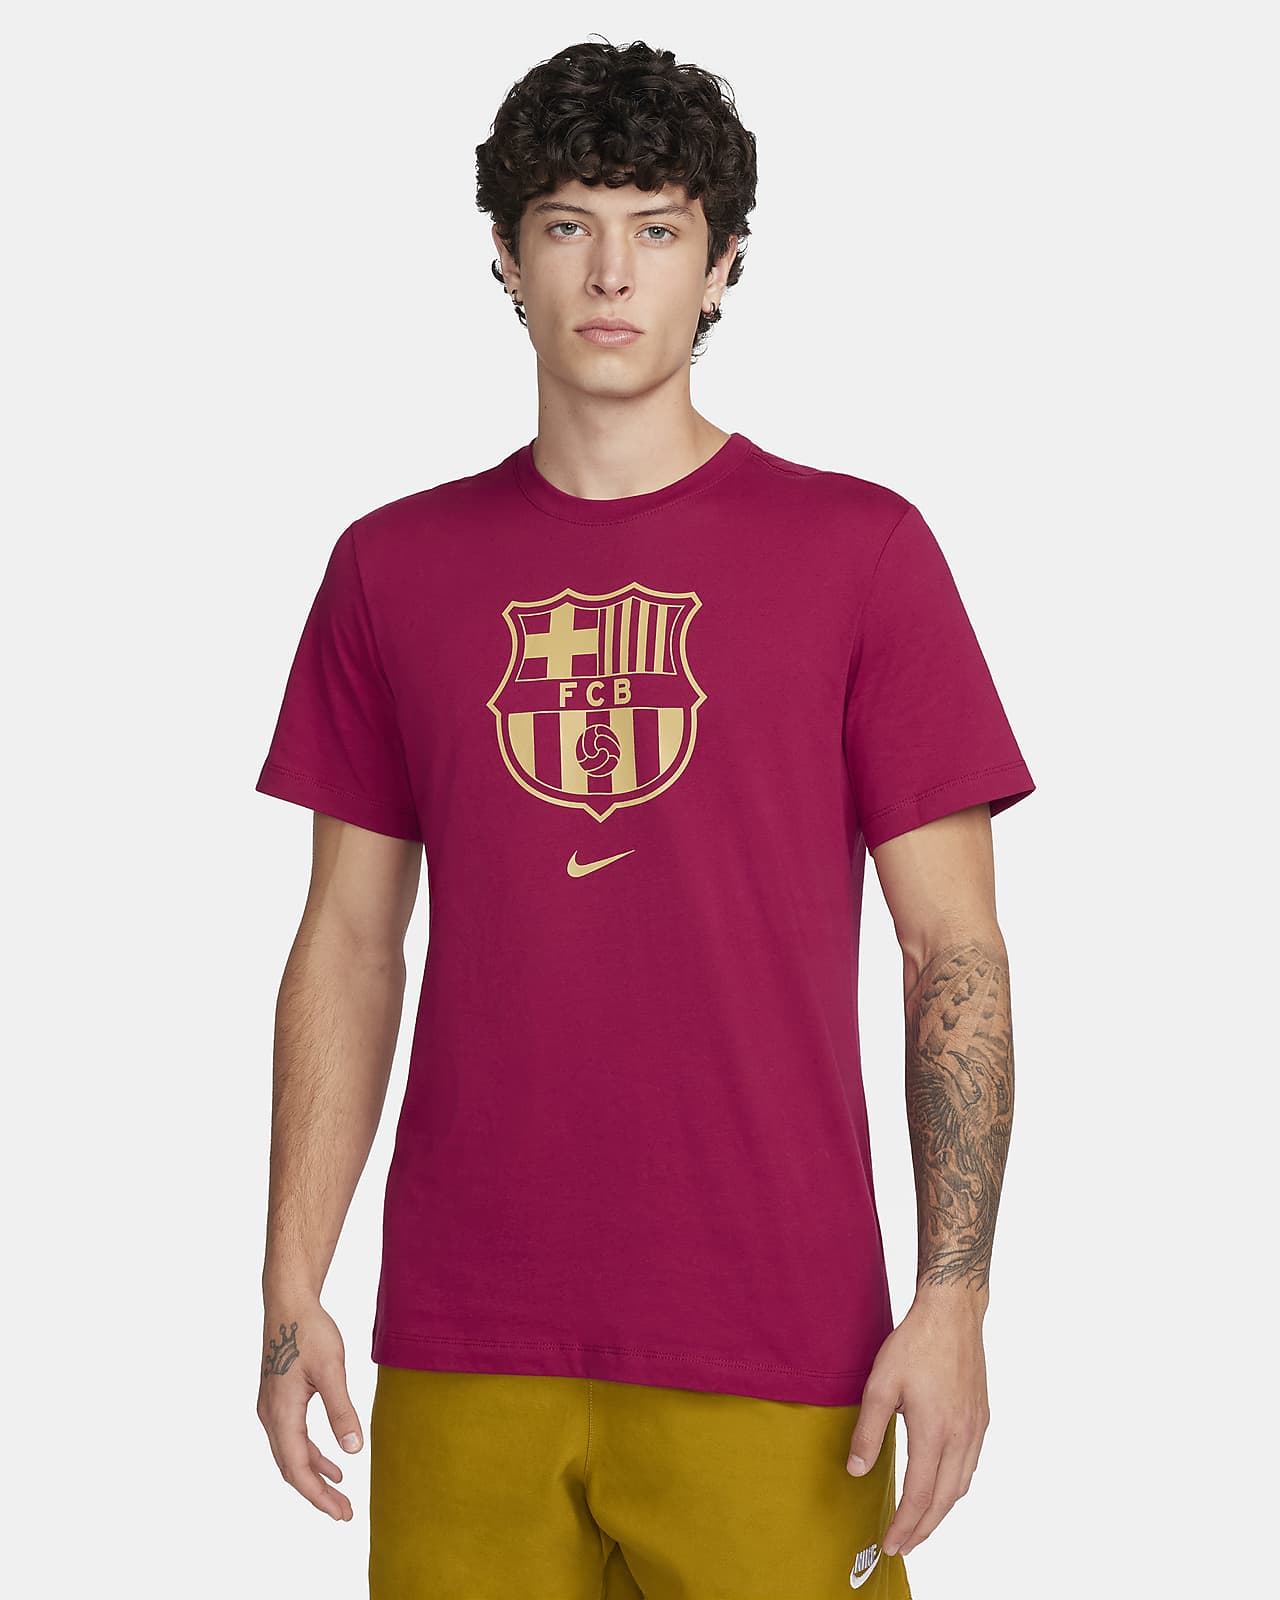 F.C. Barcelona Crest Men's Football T-Shirt